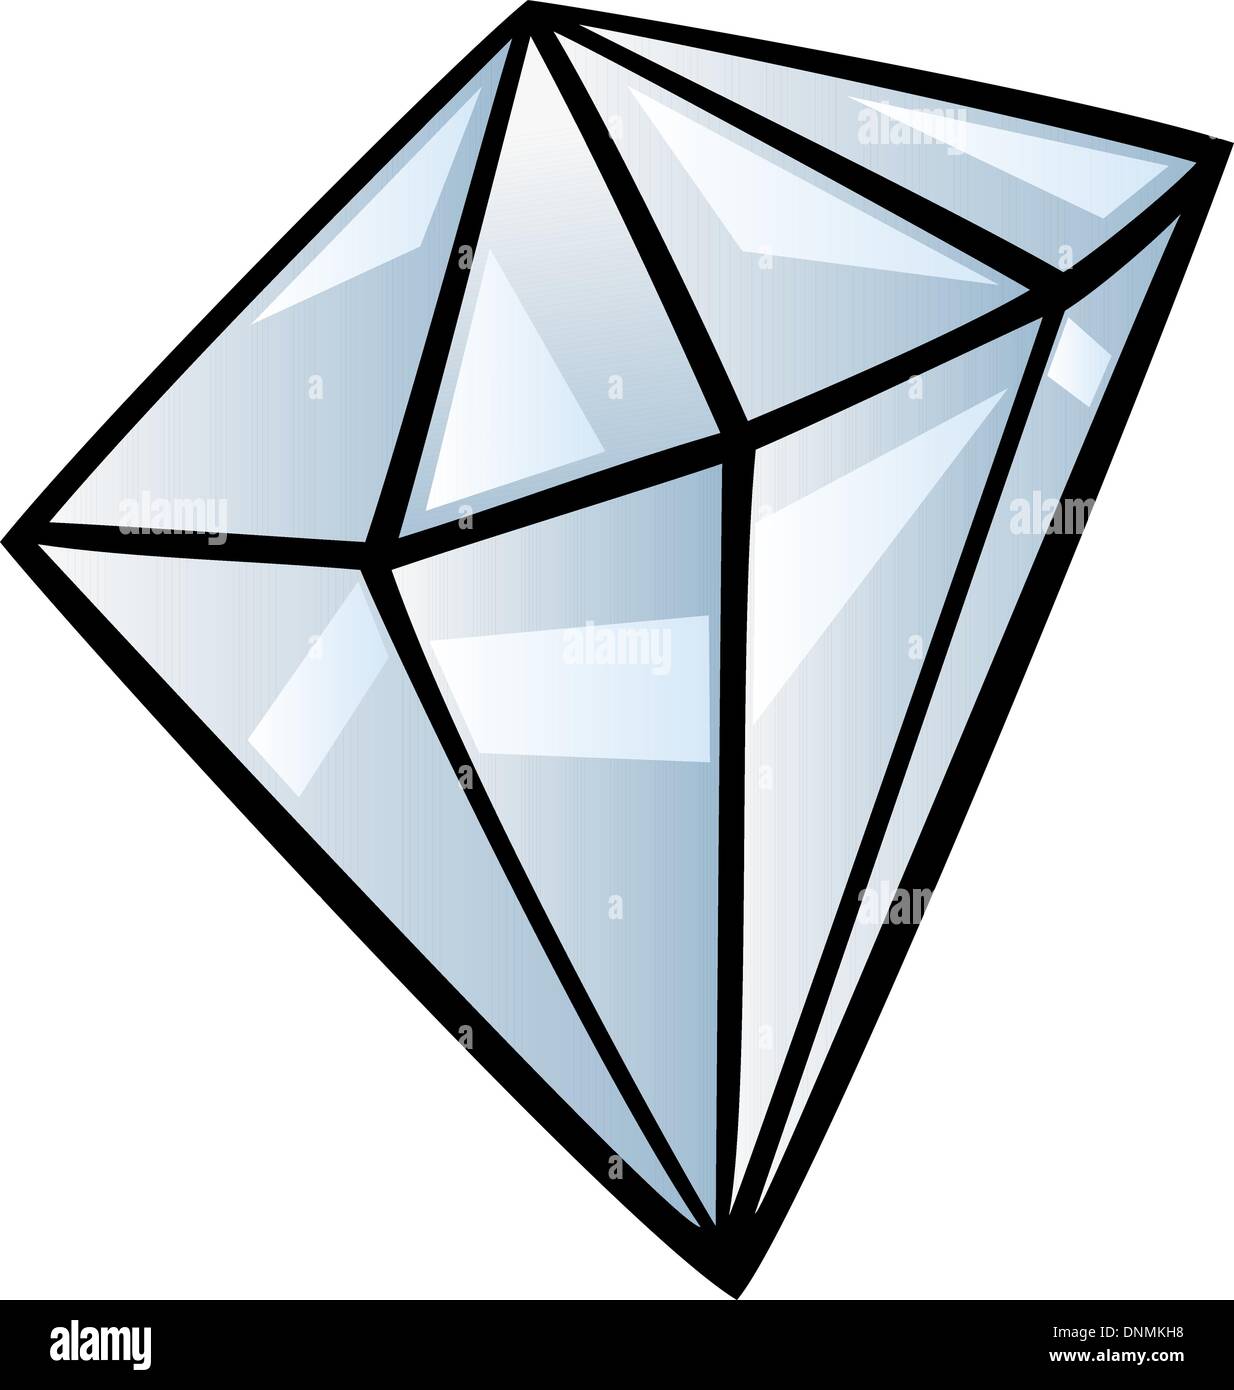 Cartoon-Illustration von Diamant Edelstein ClipArt Stock-Vektorgrafik -  Alamy